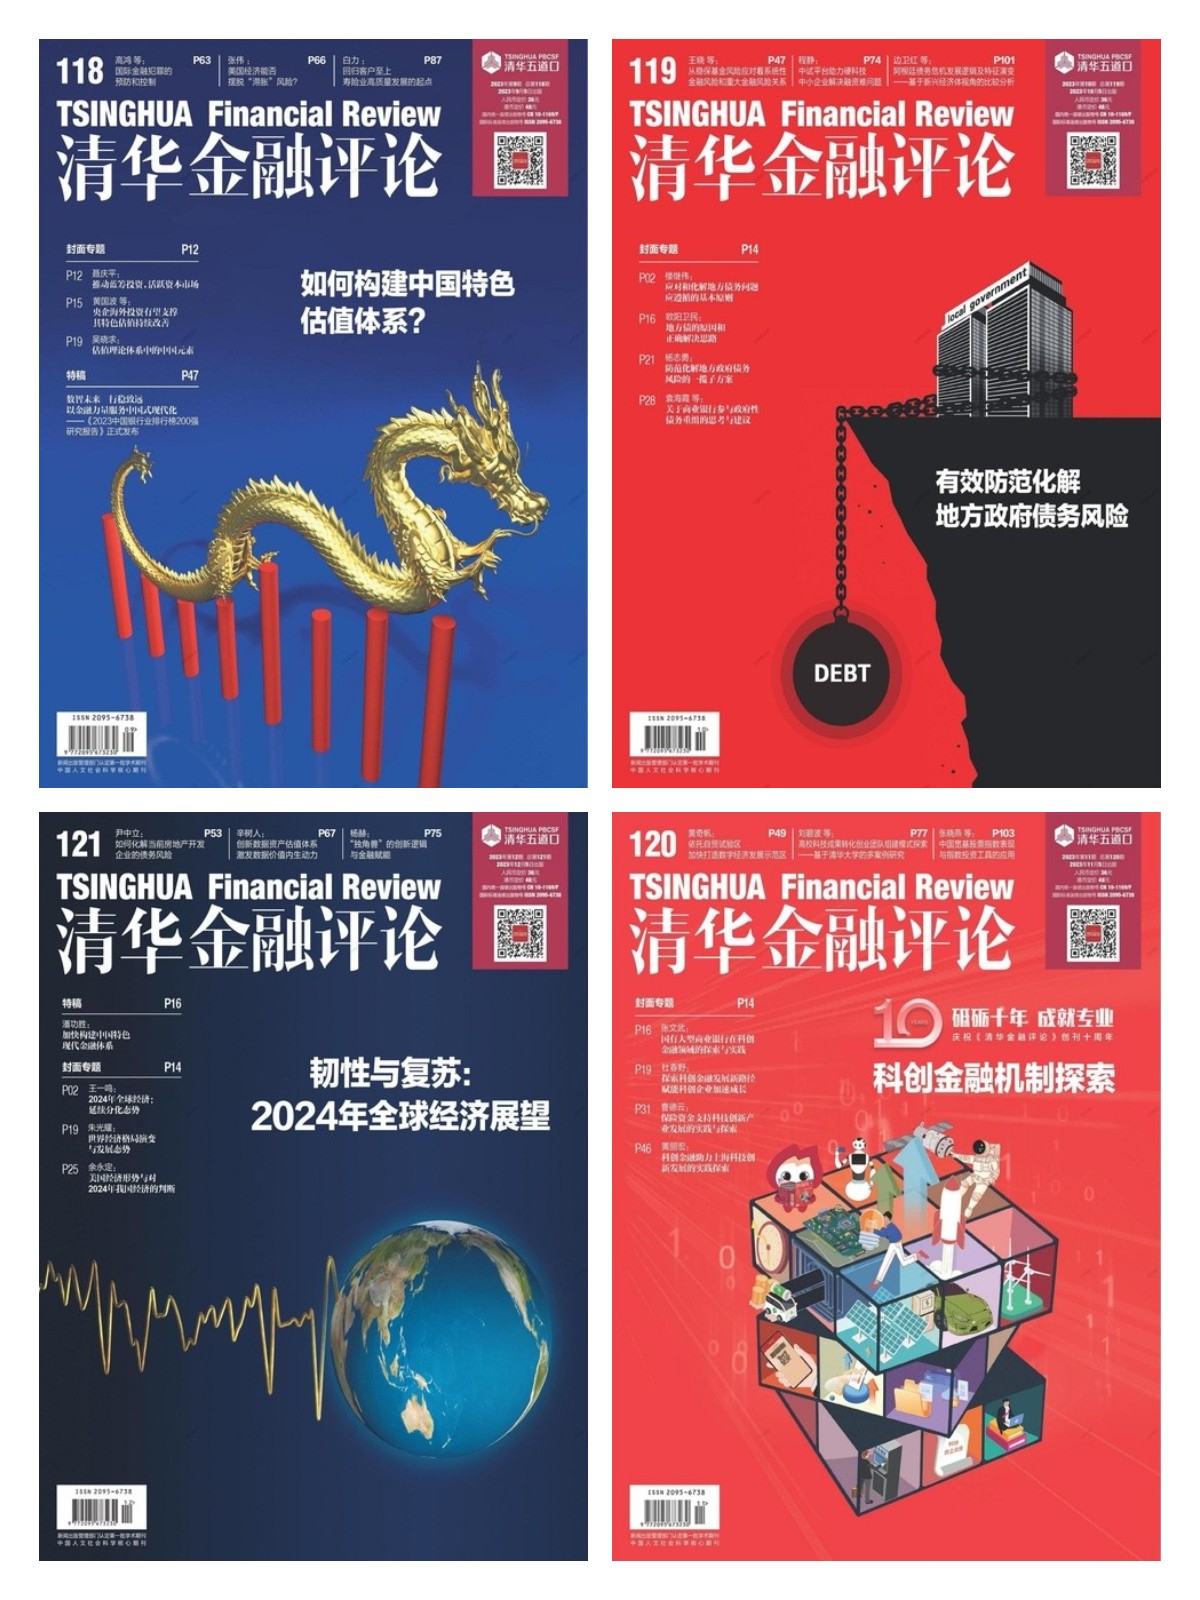 清华金融评论 Tsinghua Business Review 2023 合集